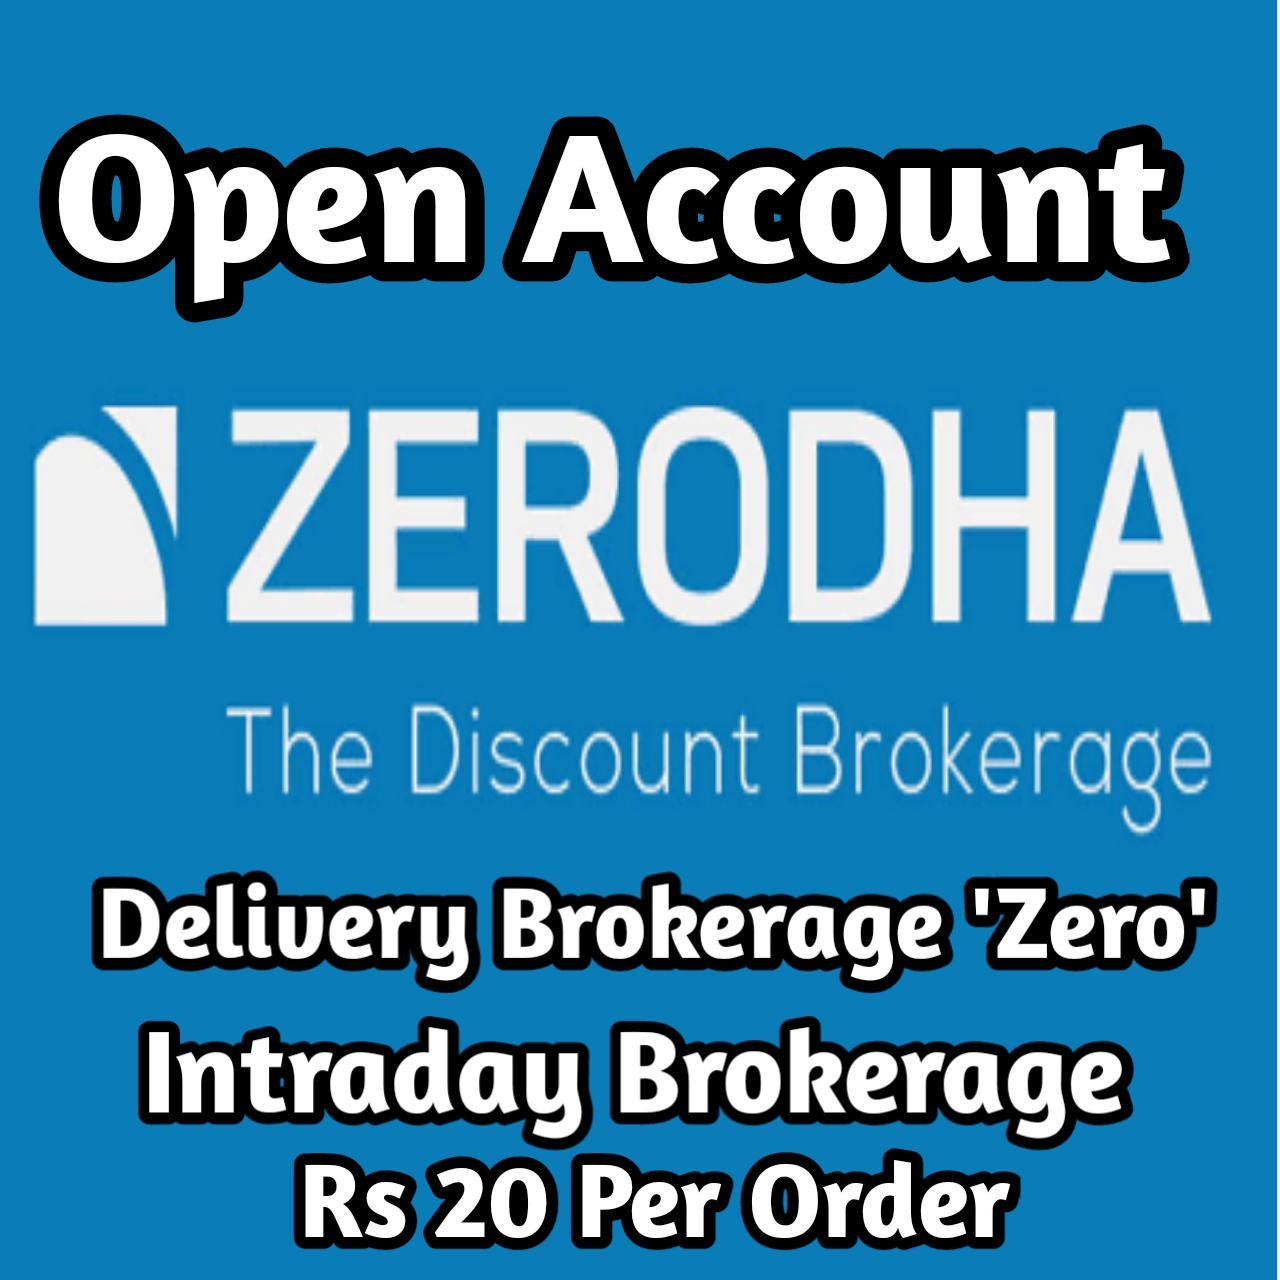 Open Account with Zerodha